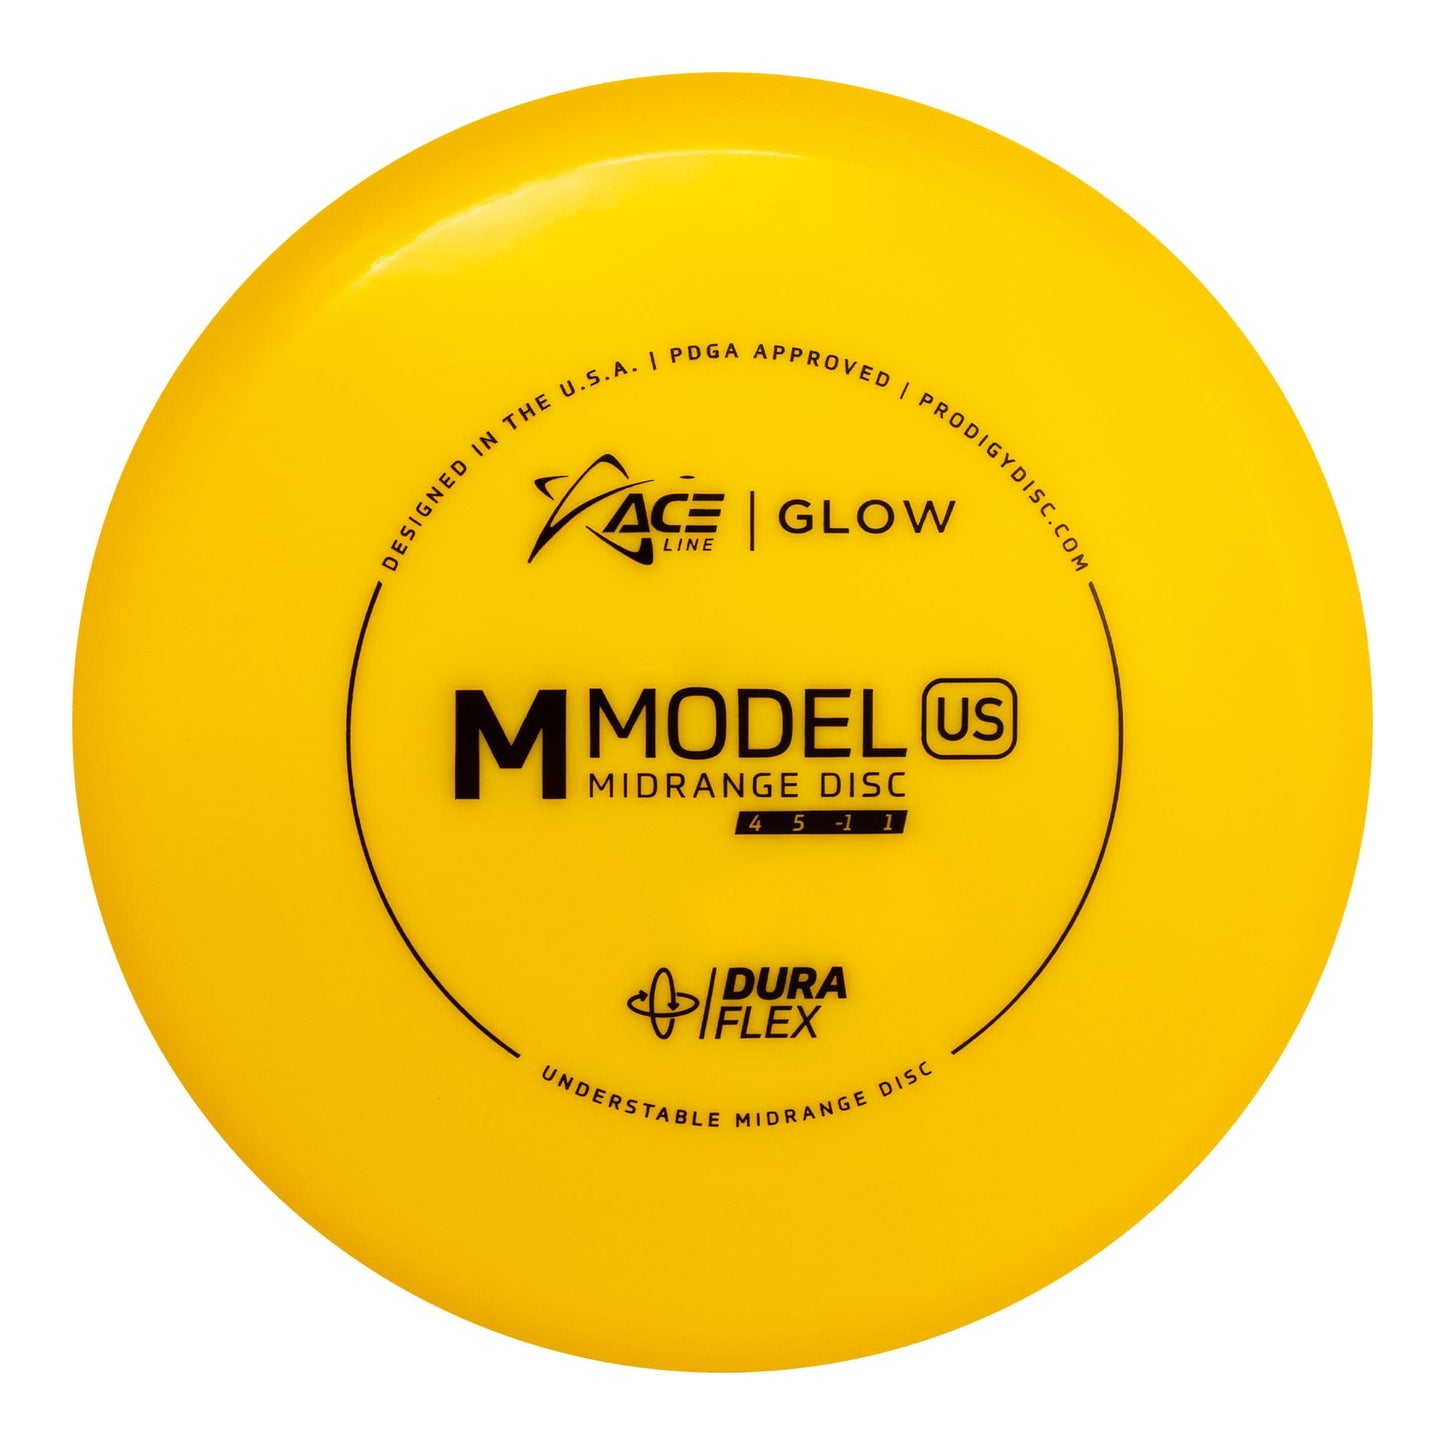 Prodigy Ace Line M Model US Midrange Disc - Duraflex Glow Plastic